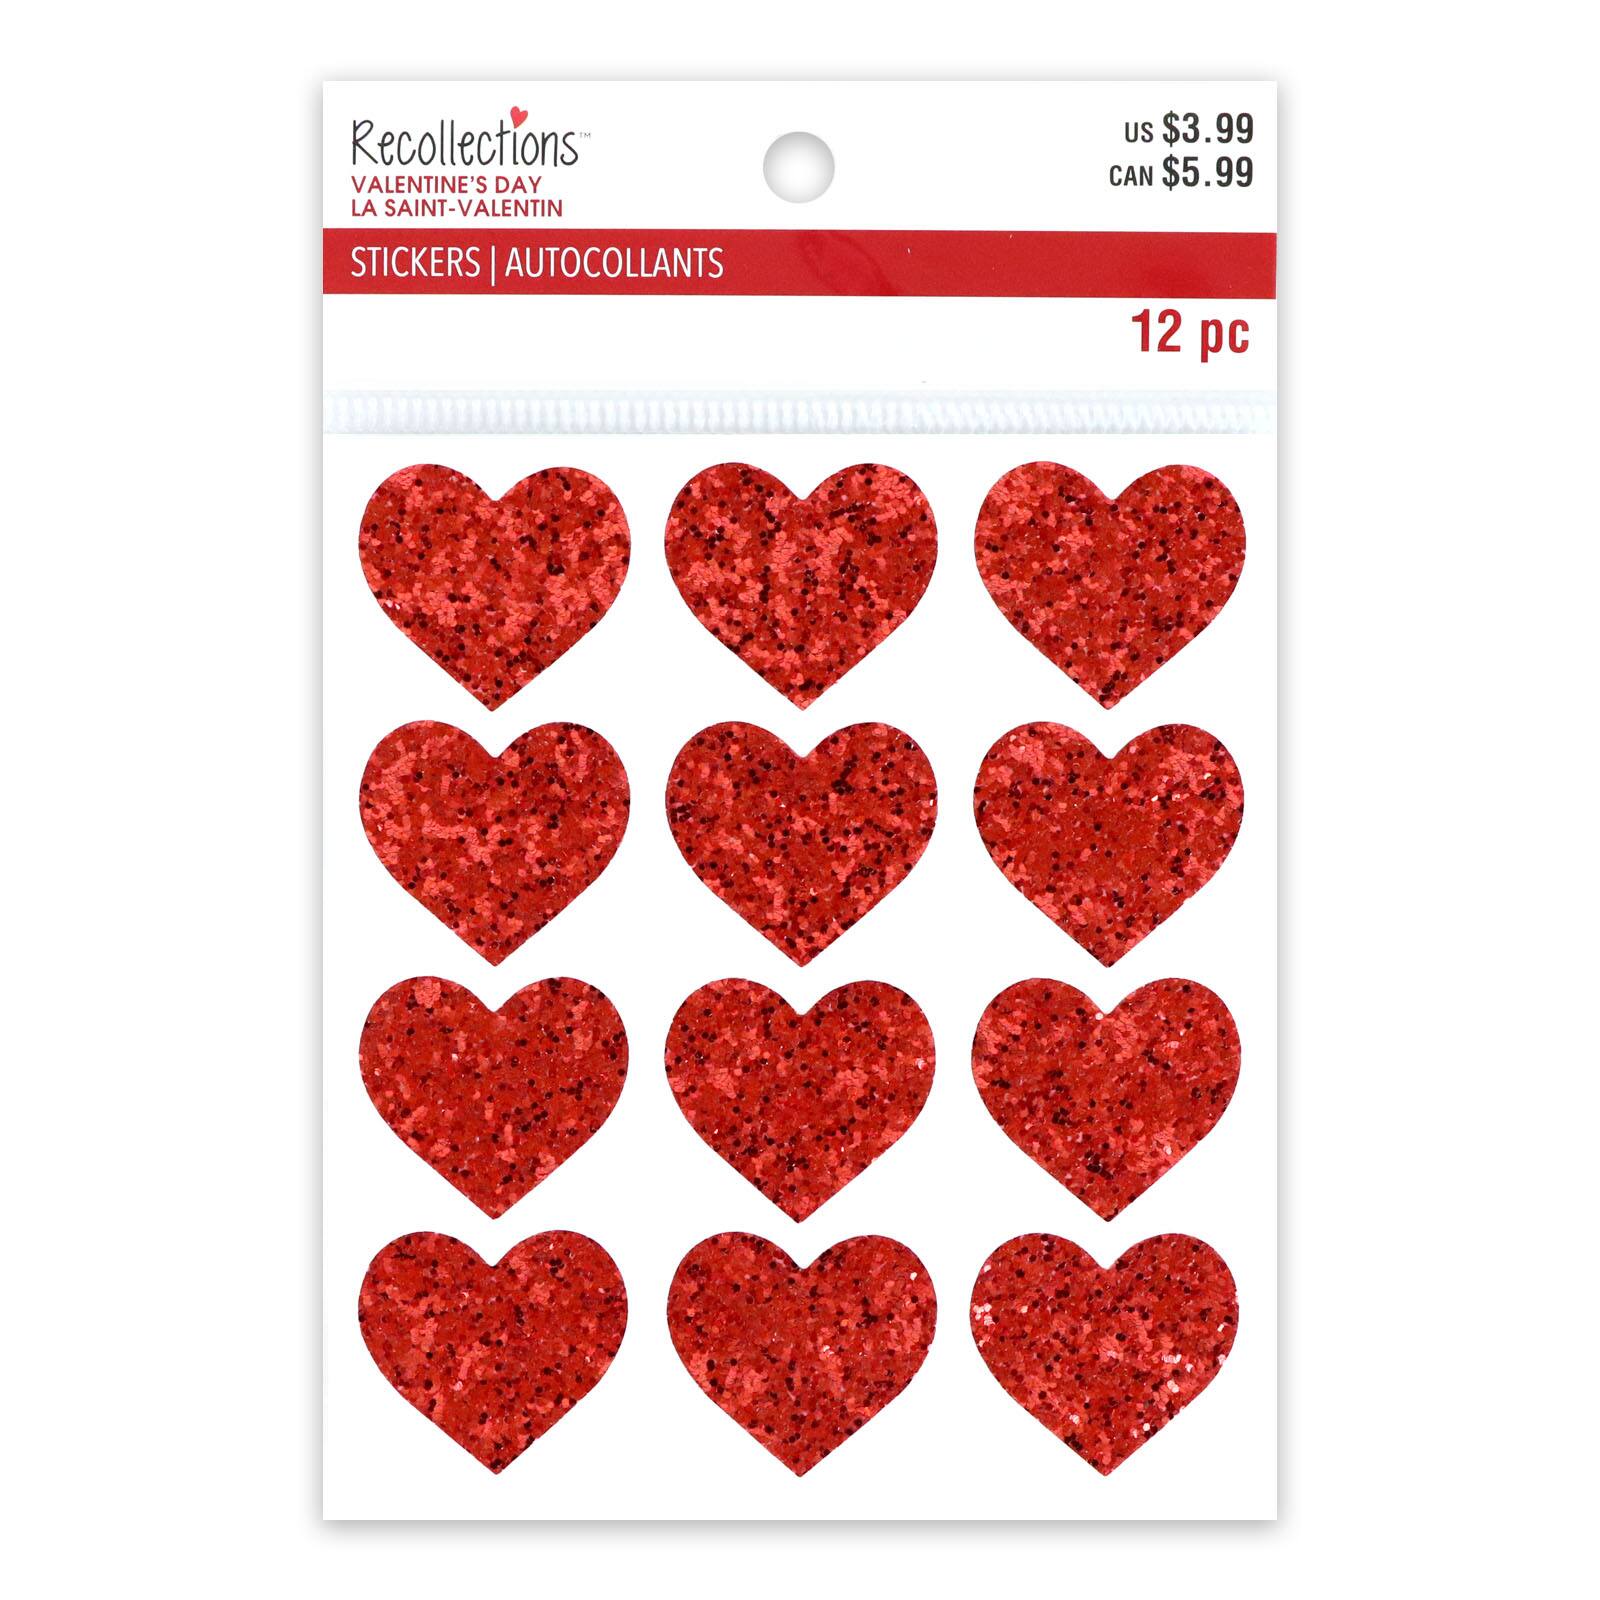 Red glitter heart stickers